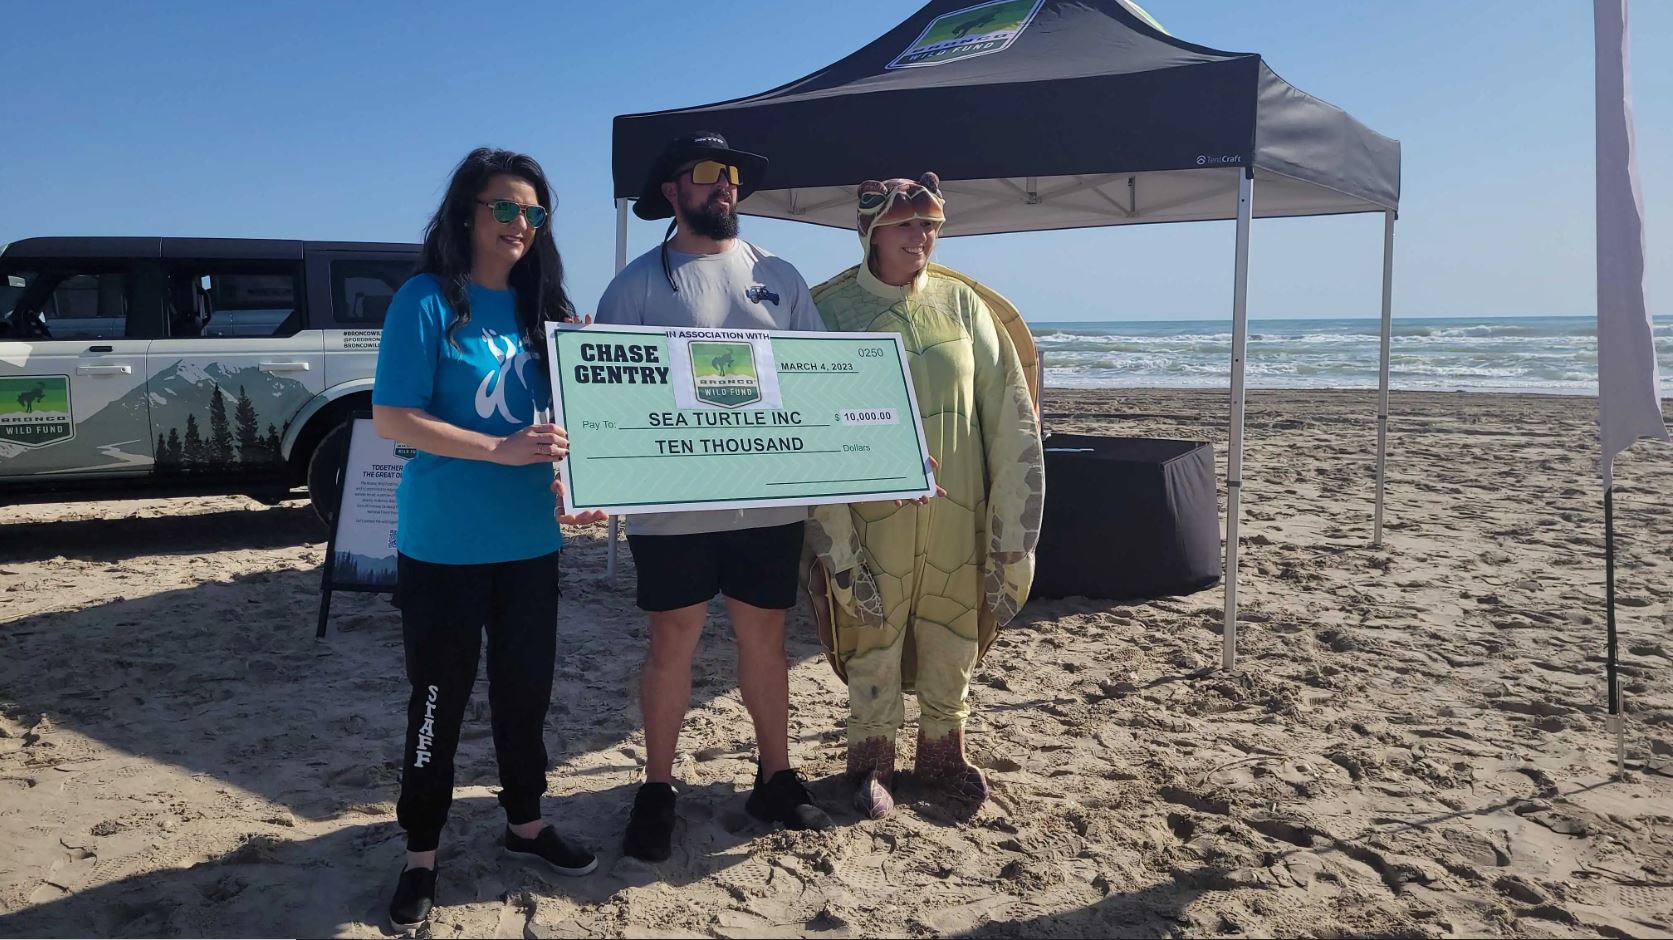 YouTuber, Tipton Ford donate $20K to Sea Turtle Inc.